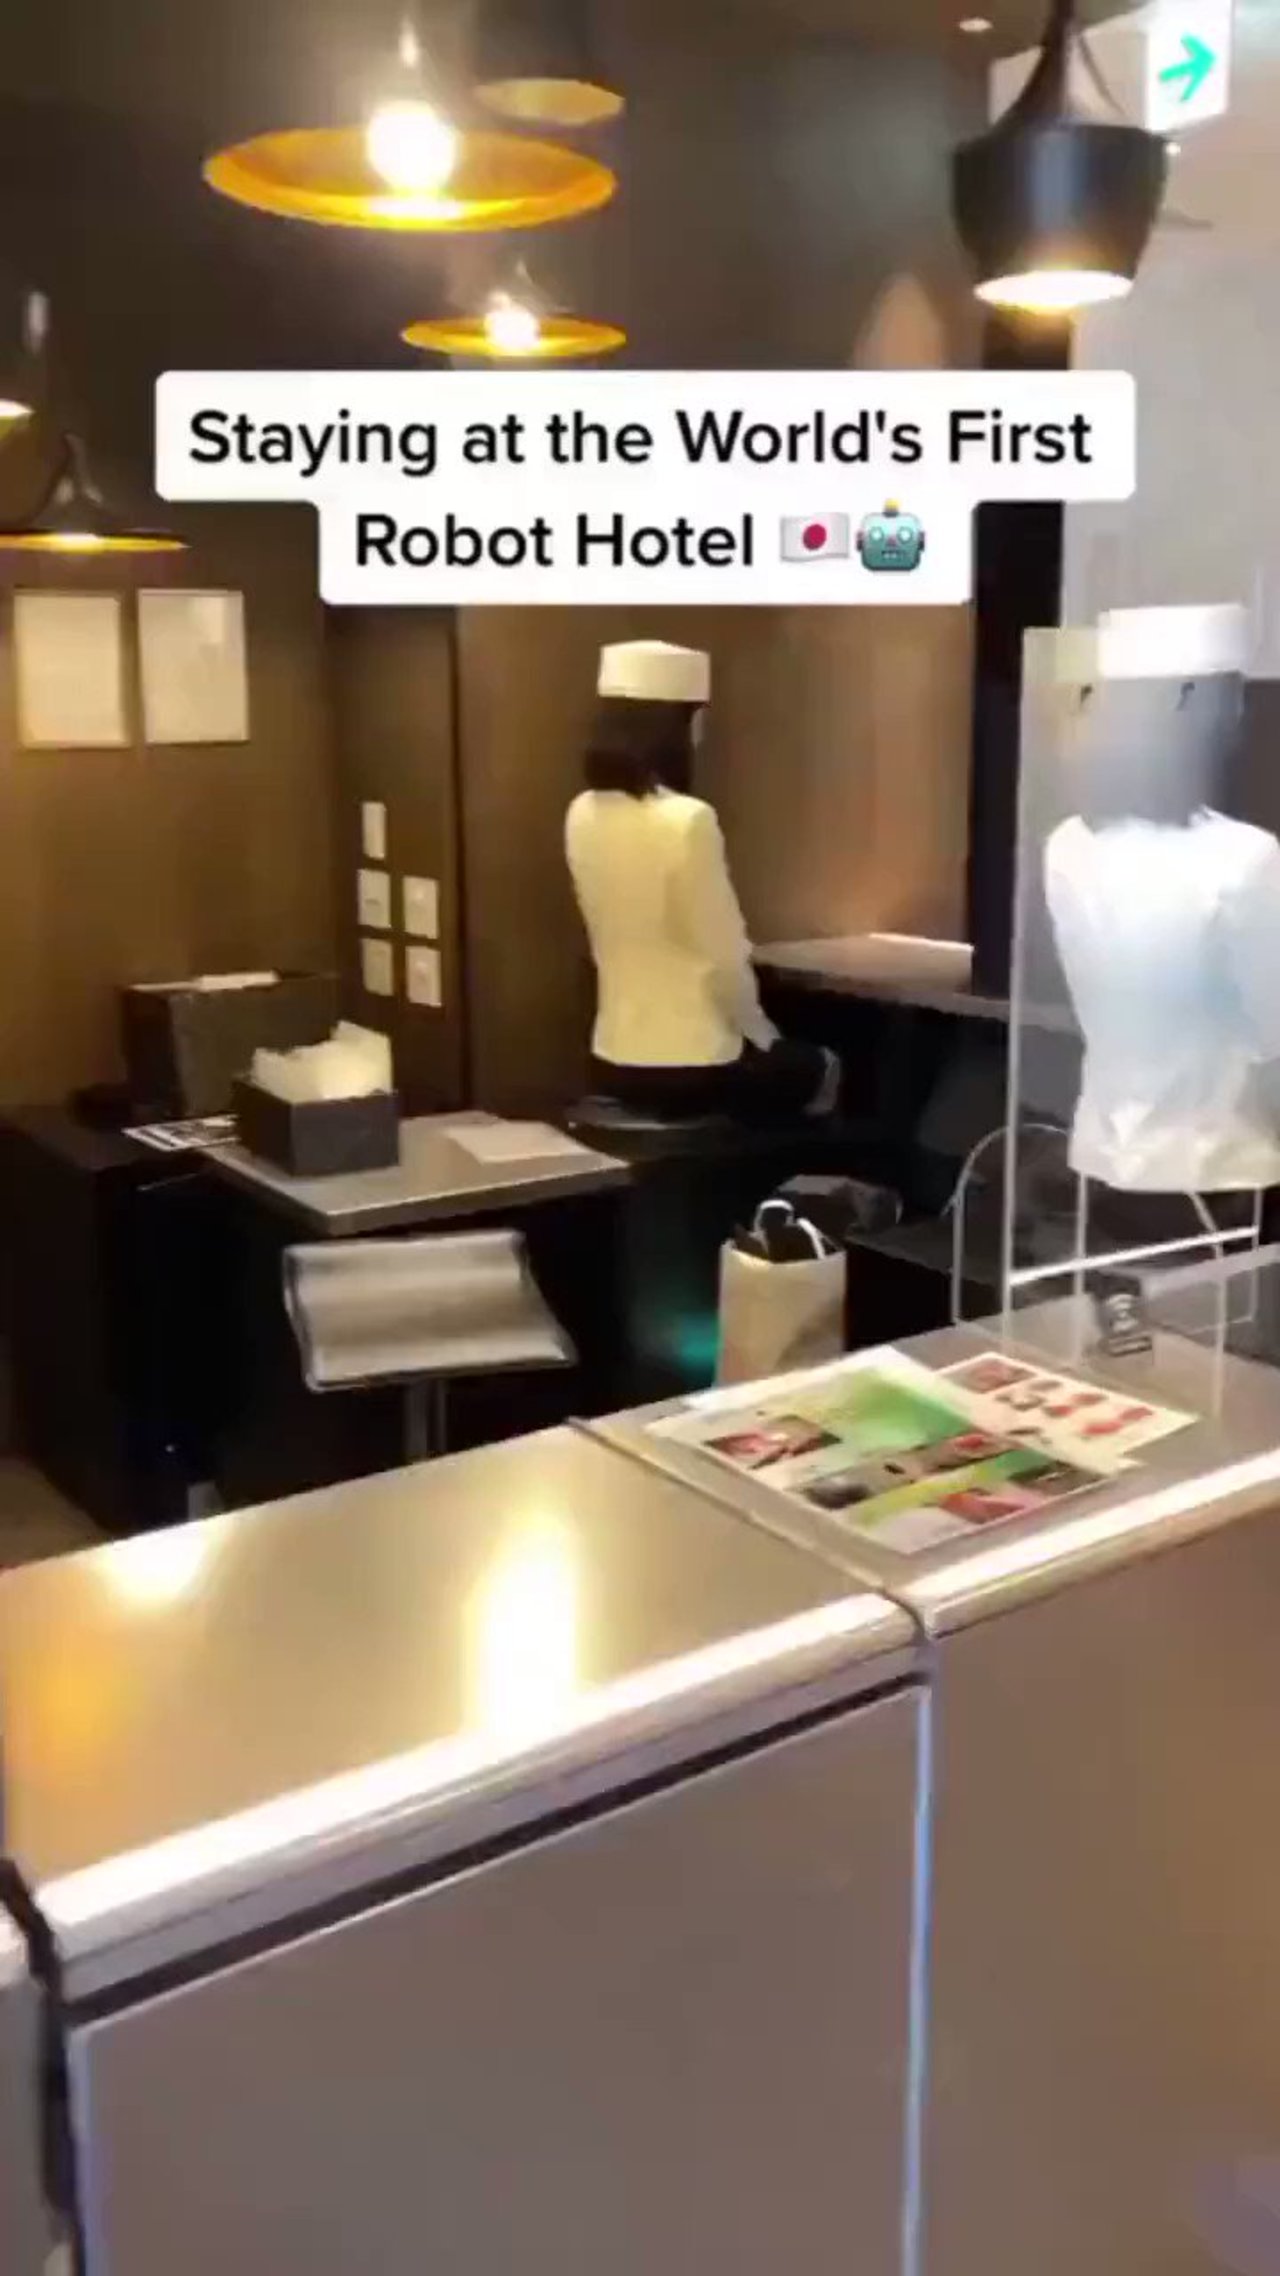 Staying at the world's first #Robot hotel via @srsnews2022 #RPA #Automation #Innovation #TechForGood #AI #ArtificialIntelligence cc: @ronald_vanloon @kuriharan @ravikikan https://t.co/W0Z5RJW0e1